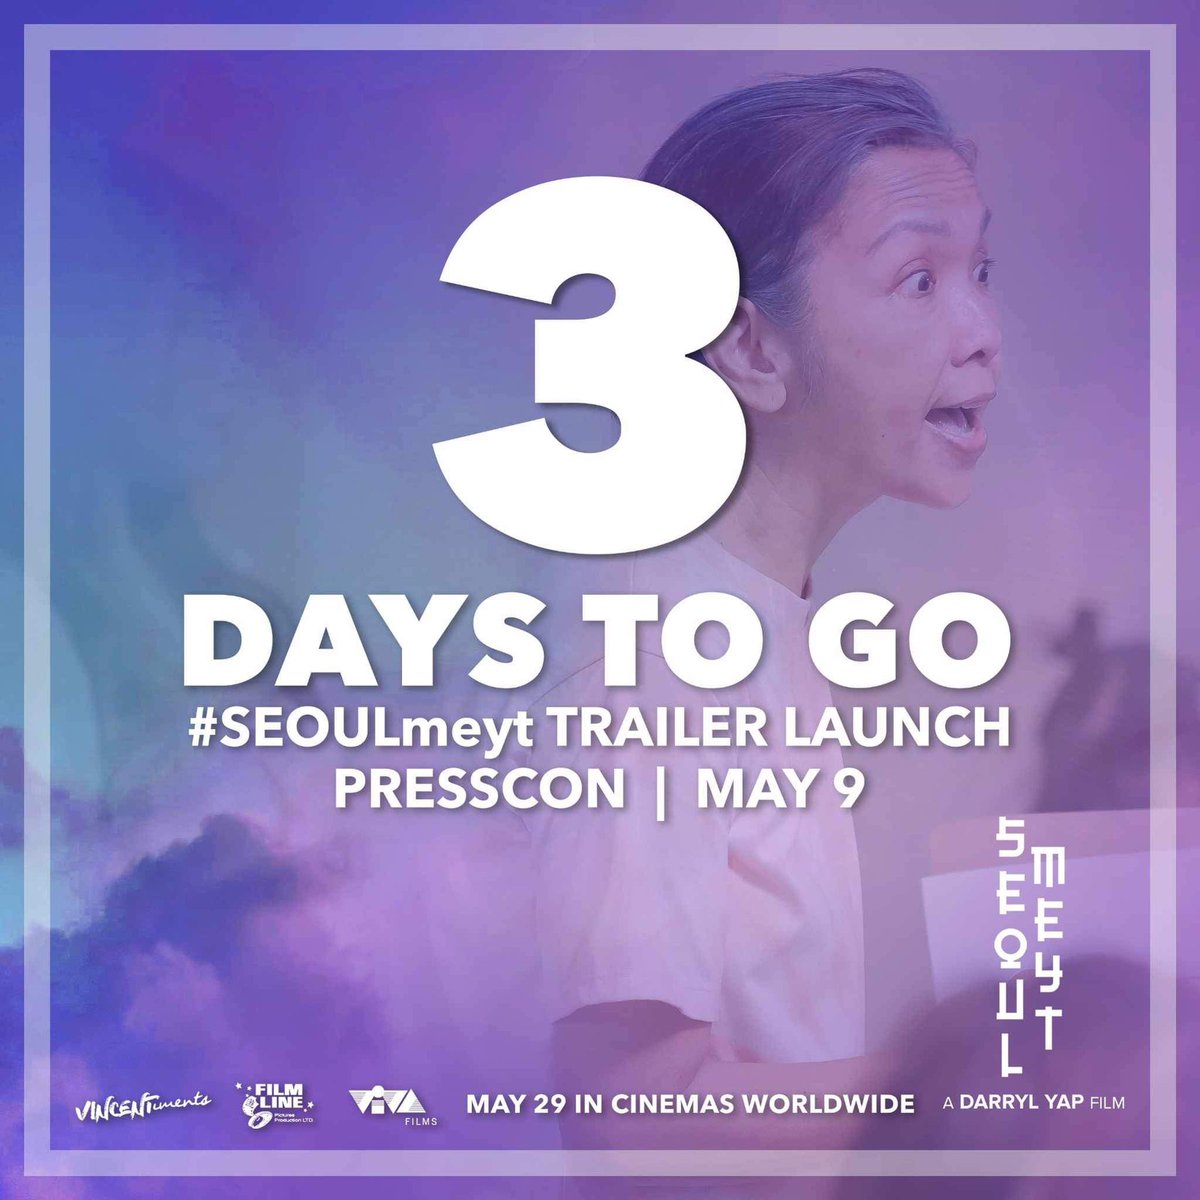 3 DAYS TO GO #SEOULmeyt TRAILER LAUNCH Presscon • MAY 9 #SEOULmeyt • MAY 29 CINEMAS NATIONWIDE